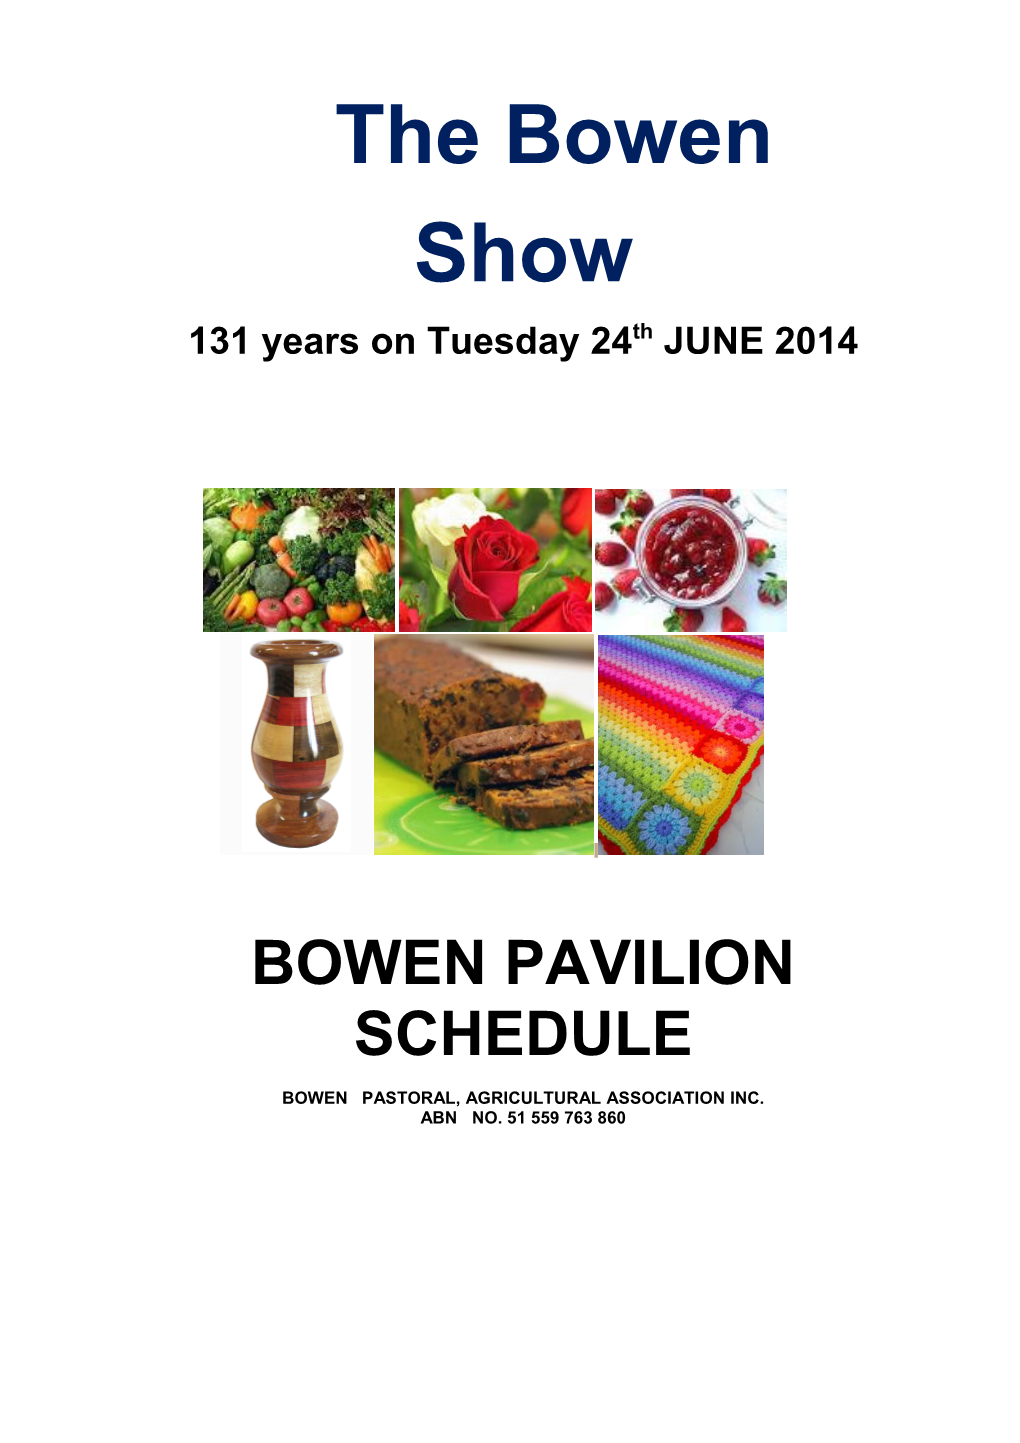 Bowen Pastoral, Agricultural Association Inc